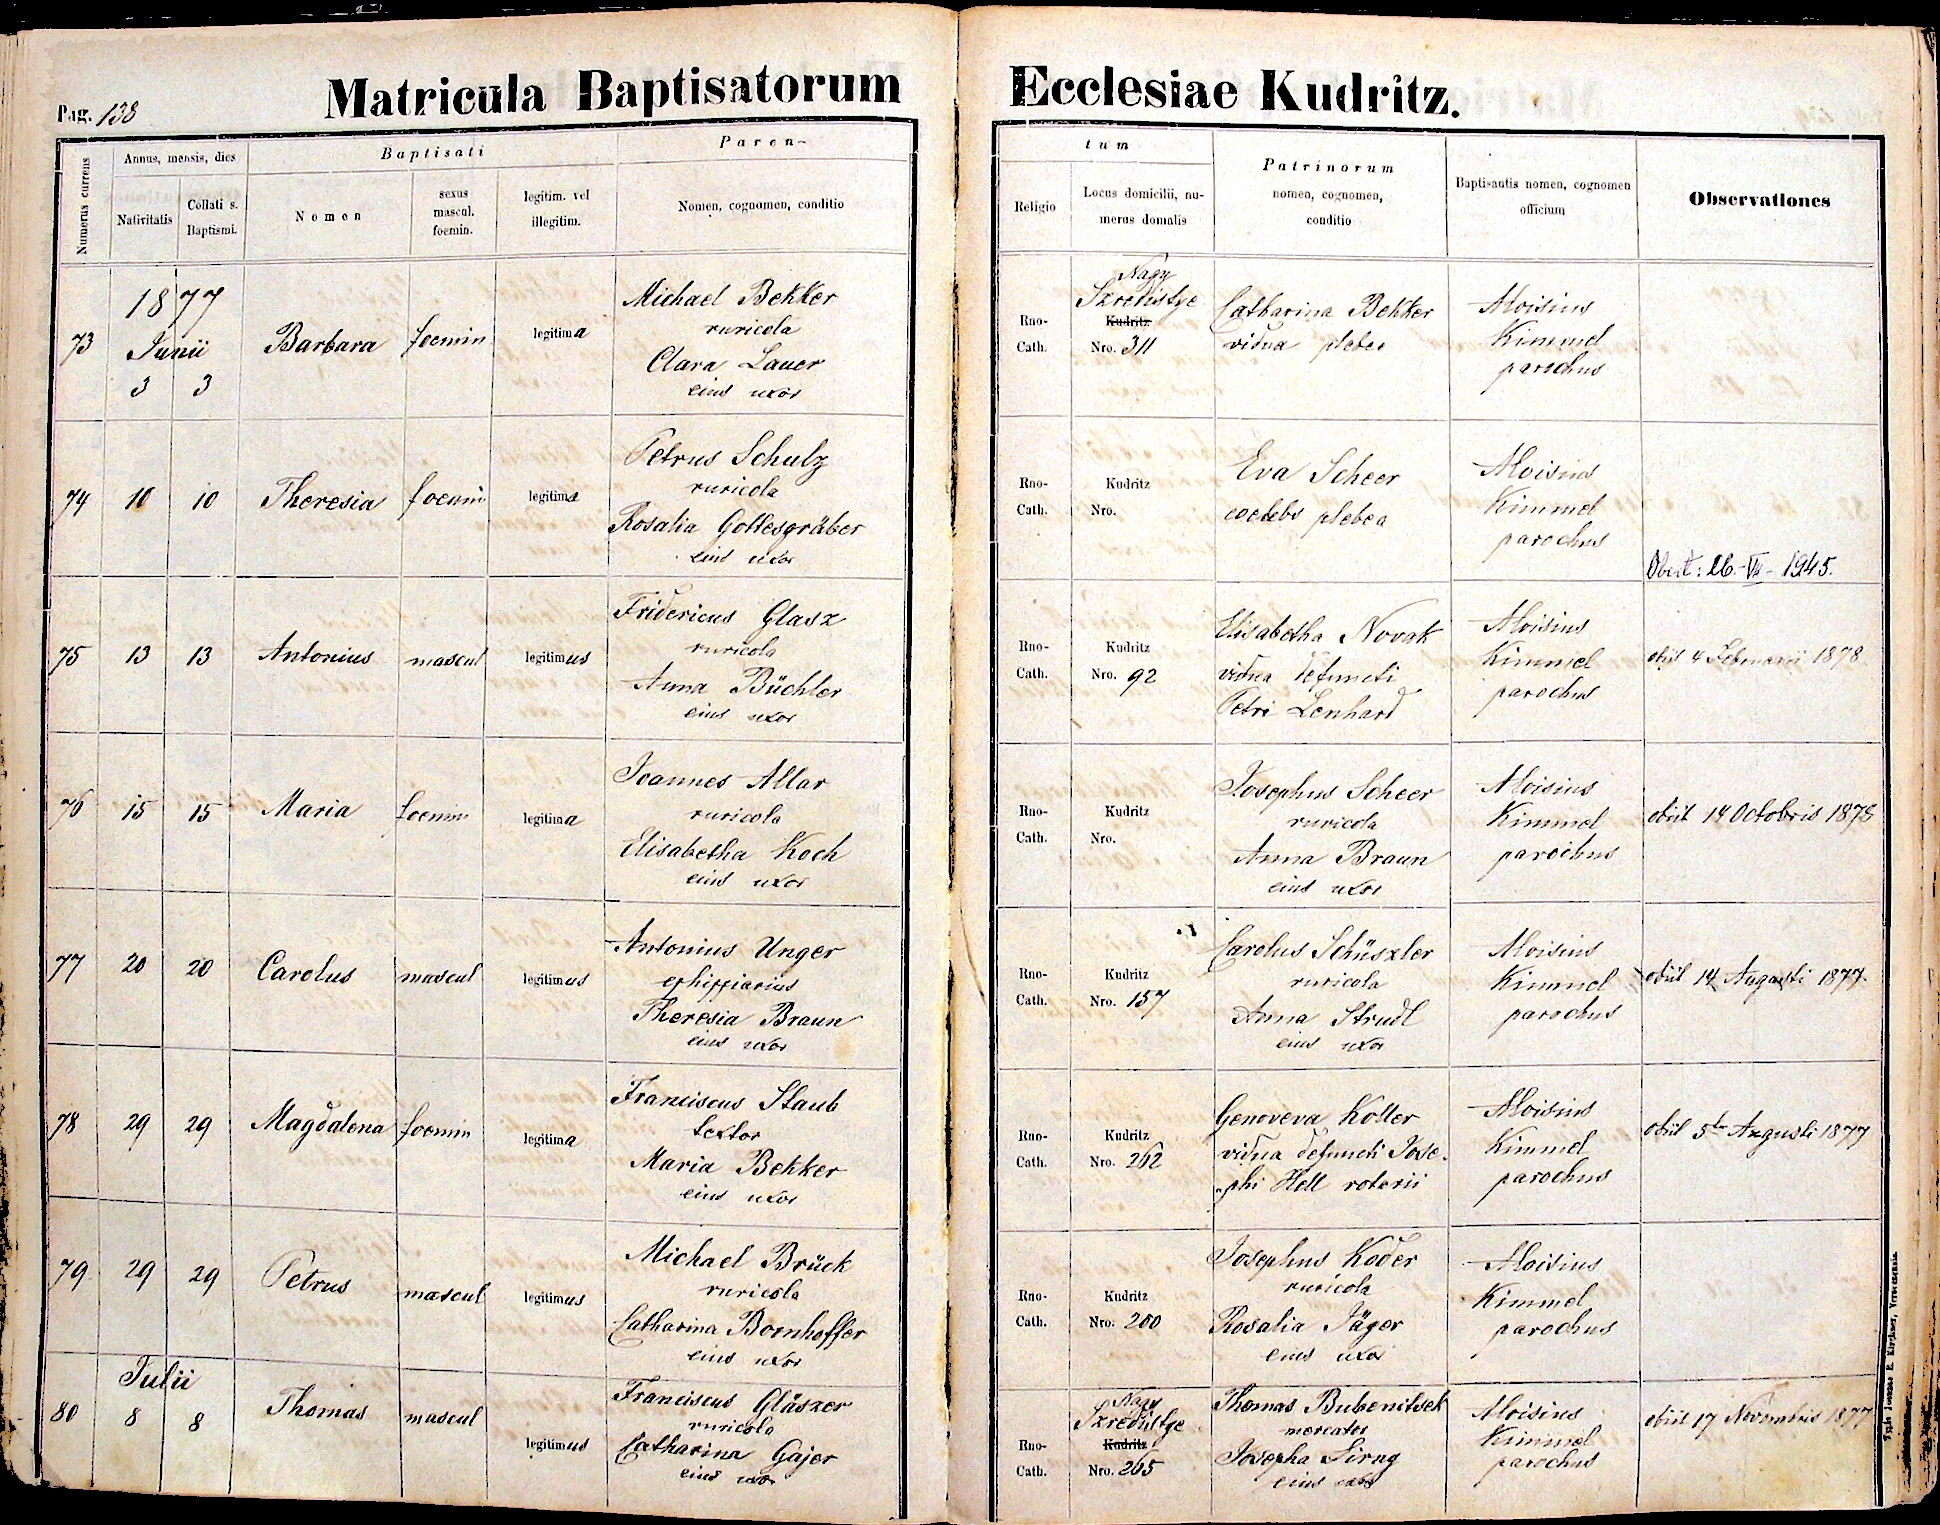 images/church_records/BIRTHS/1870-1879B/1877/138